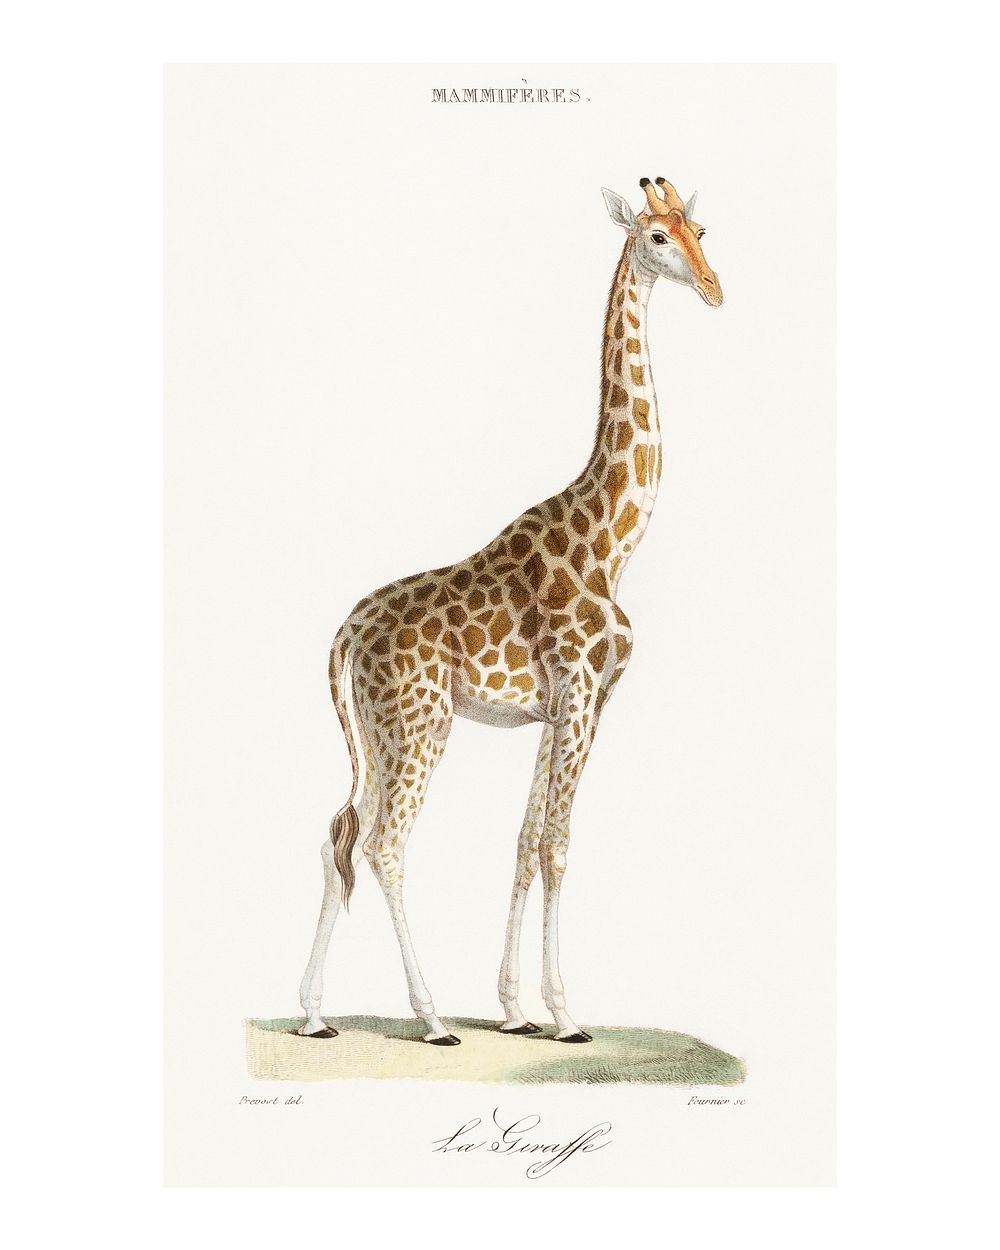 Standing giraffe vintage illustration by Florent Prevos. Digitally enhanced by rawpixel.